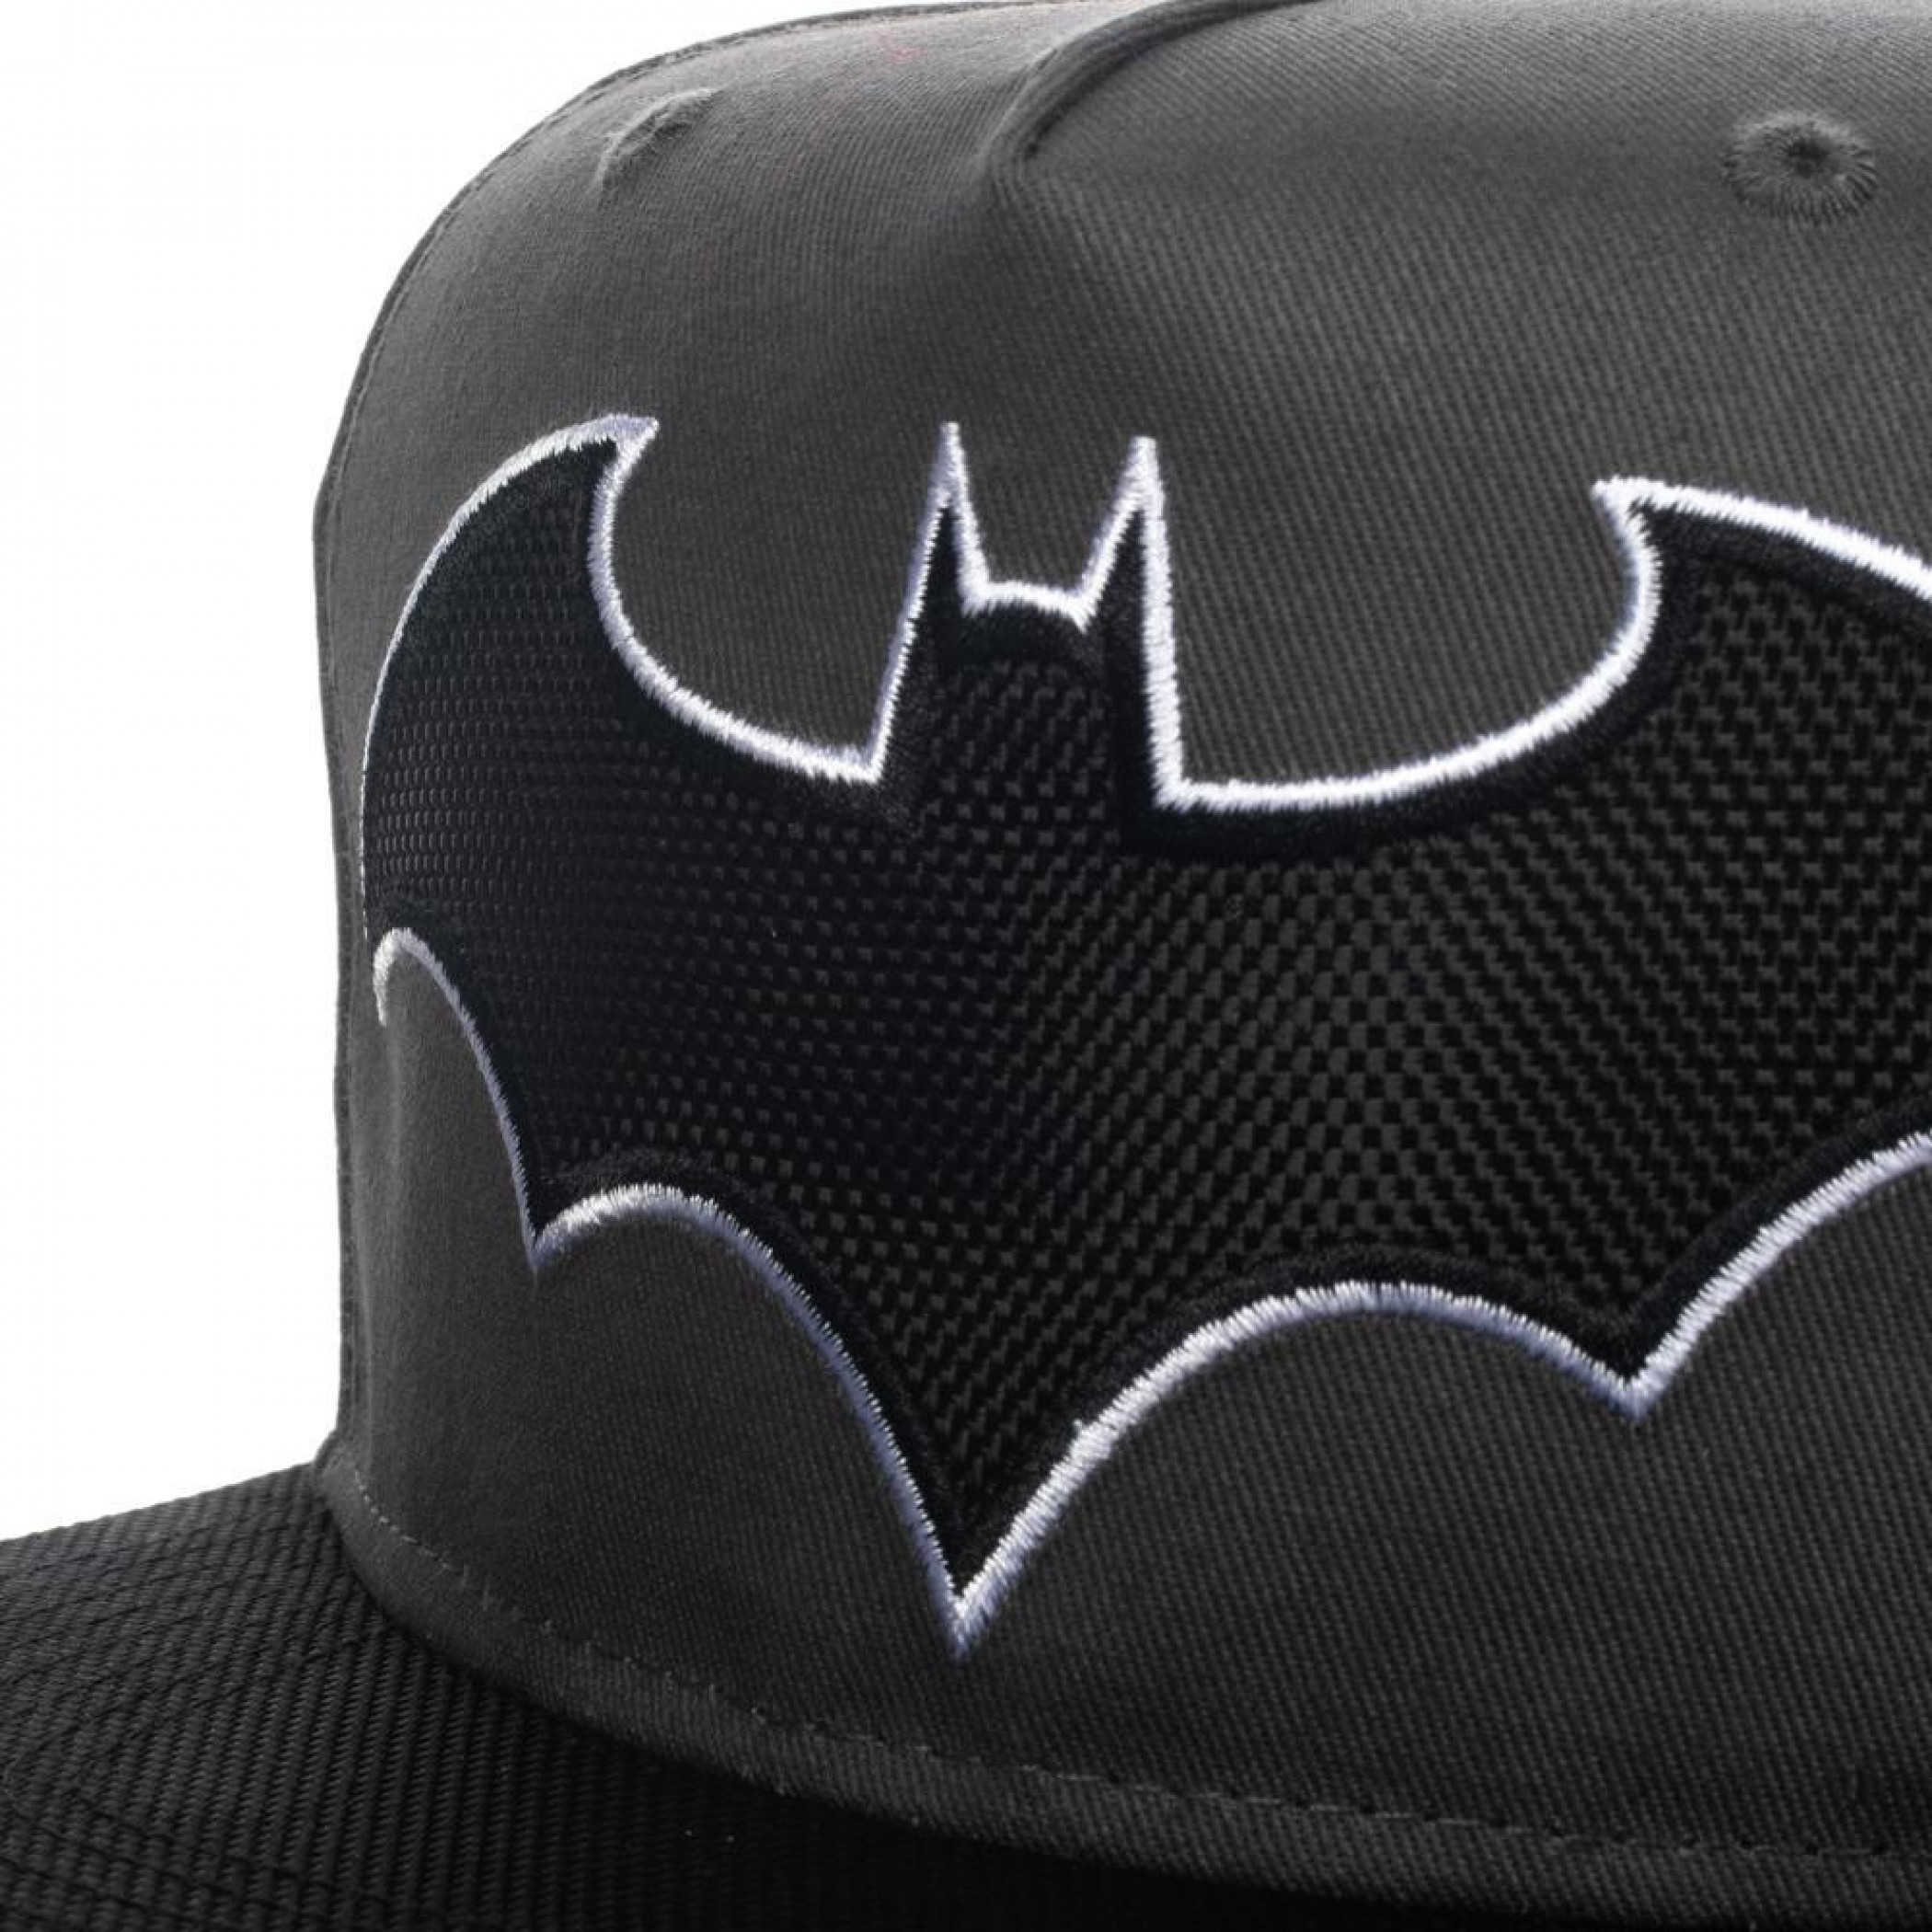 Batman Hush Symbol with Ballistic Brim Snapback Hat